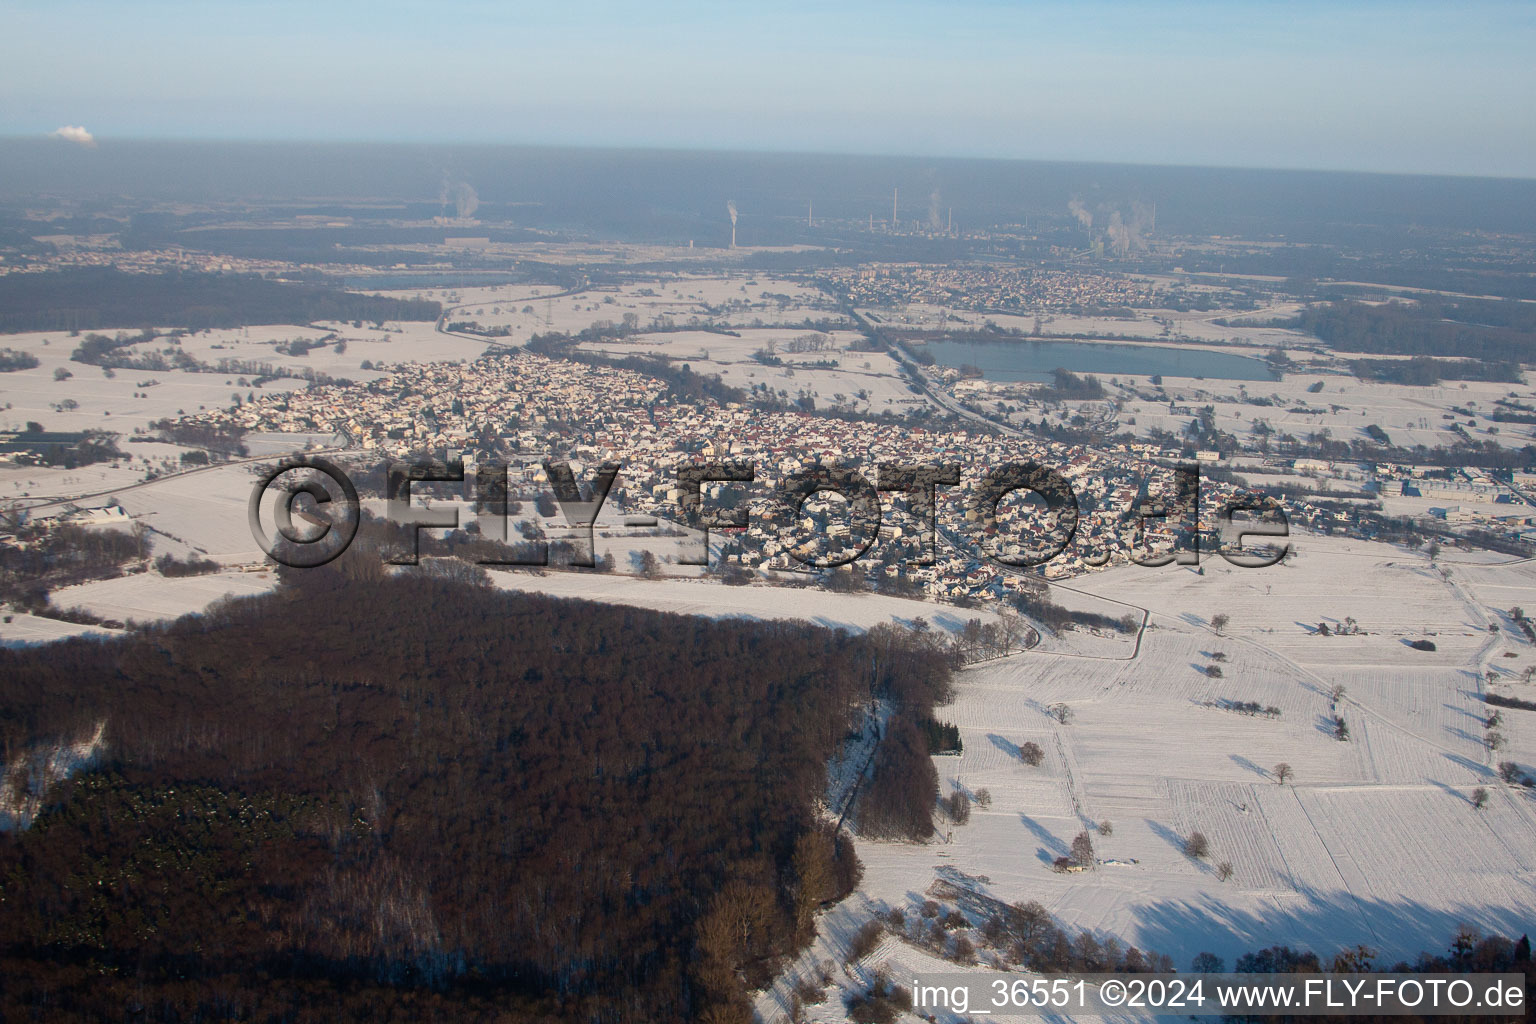 Aerial photograpy of Neuburg in the state Rhineland-Palatinate, Germany